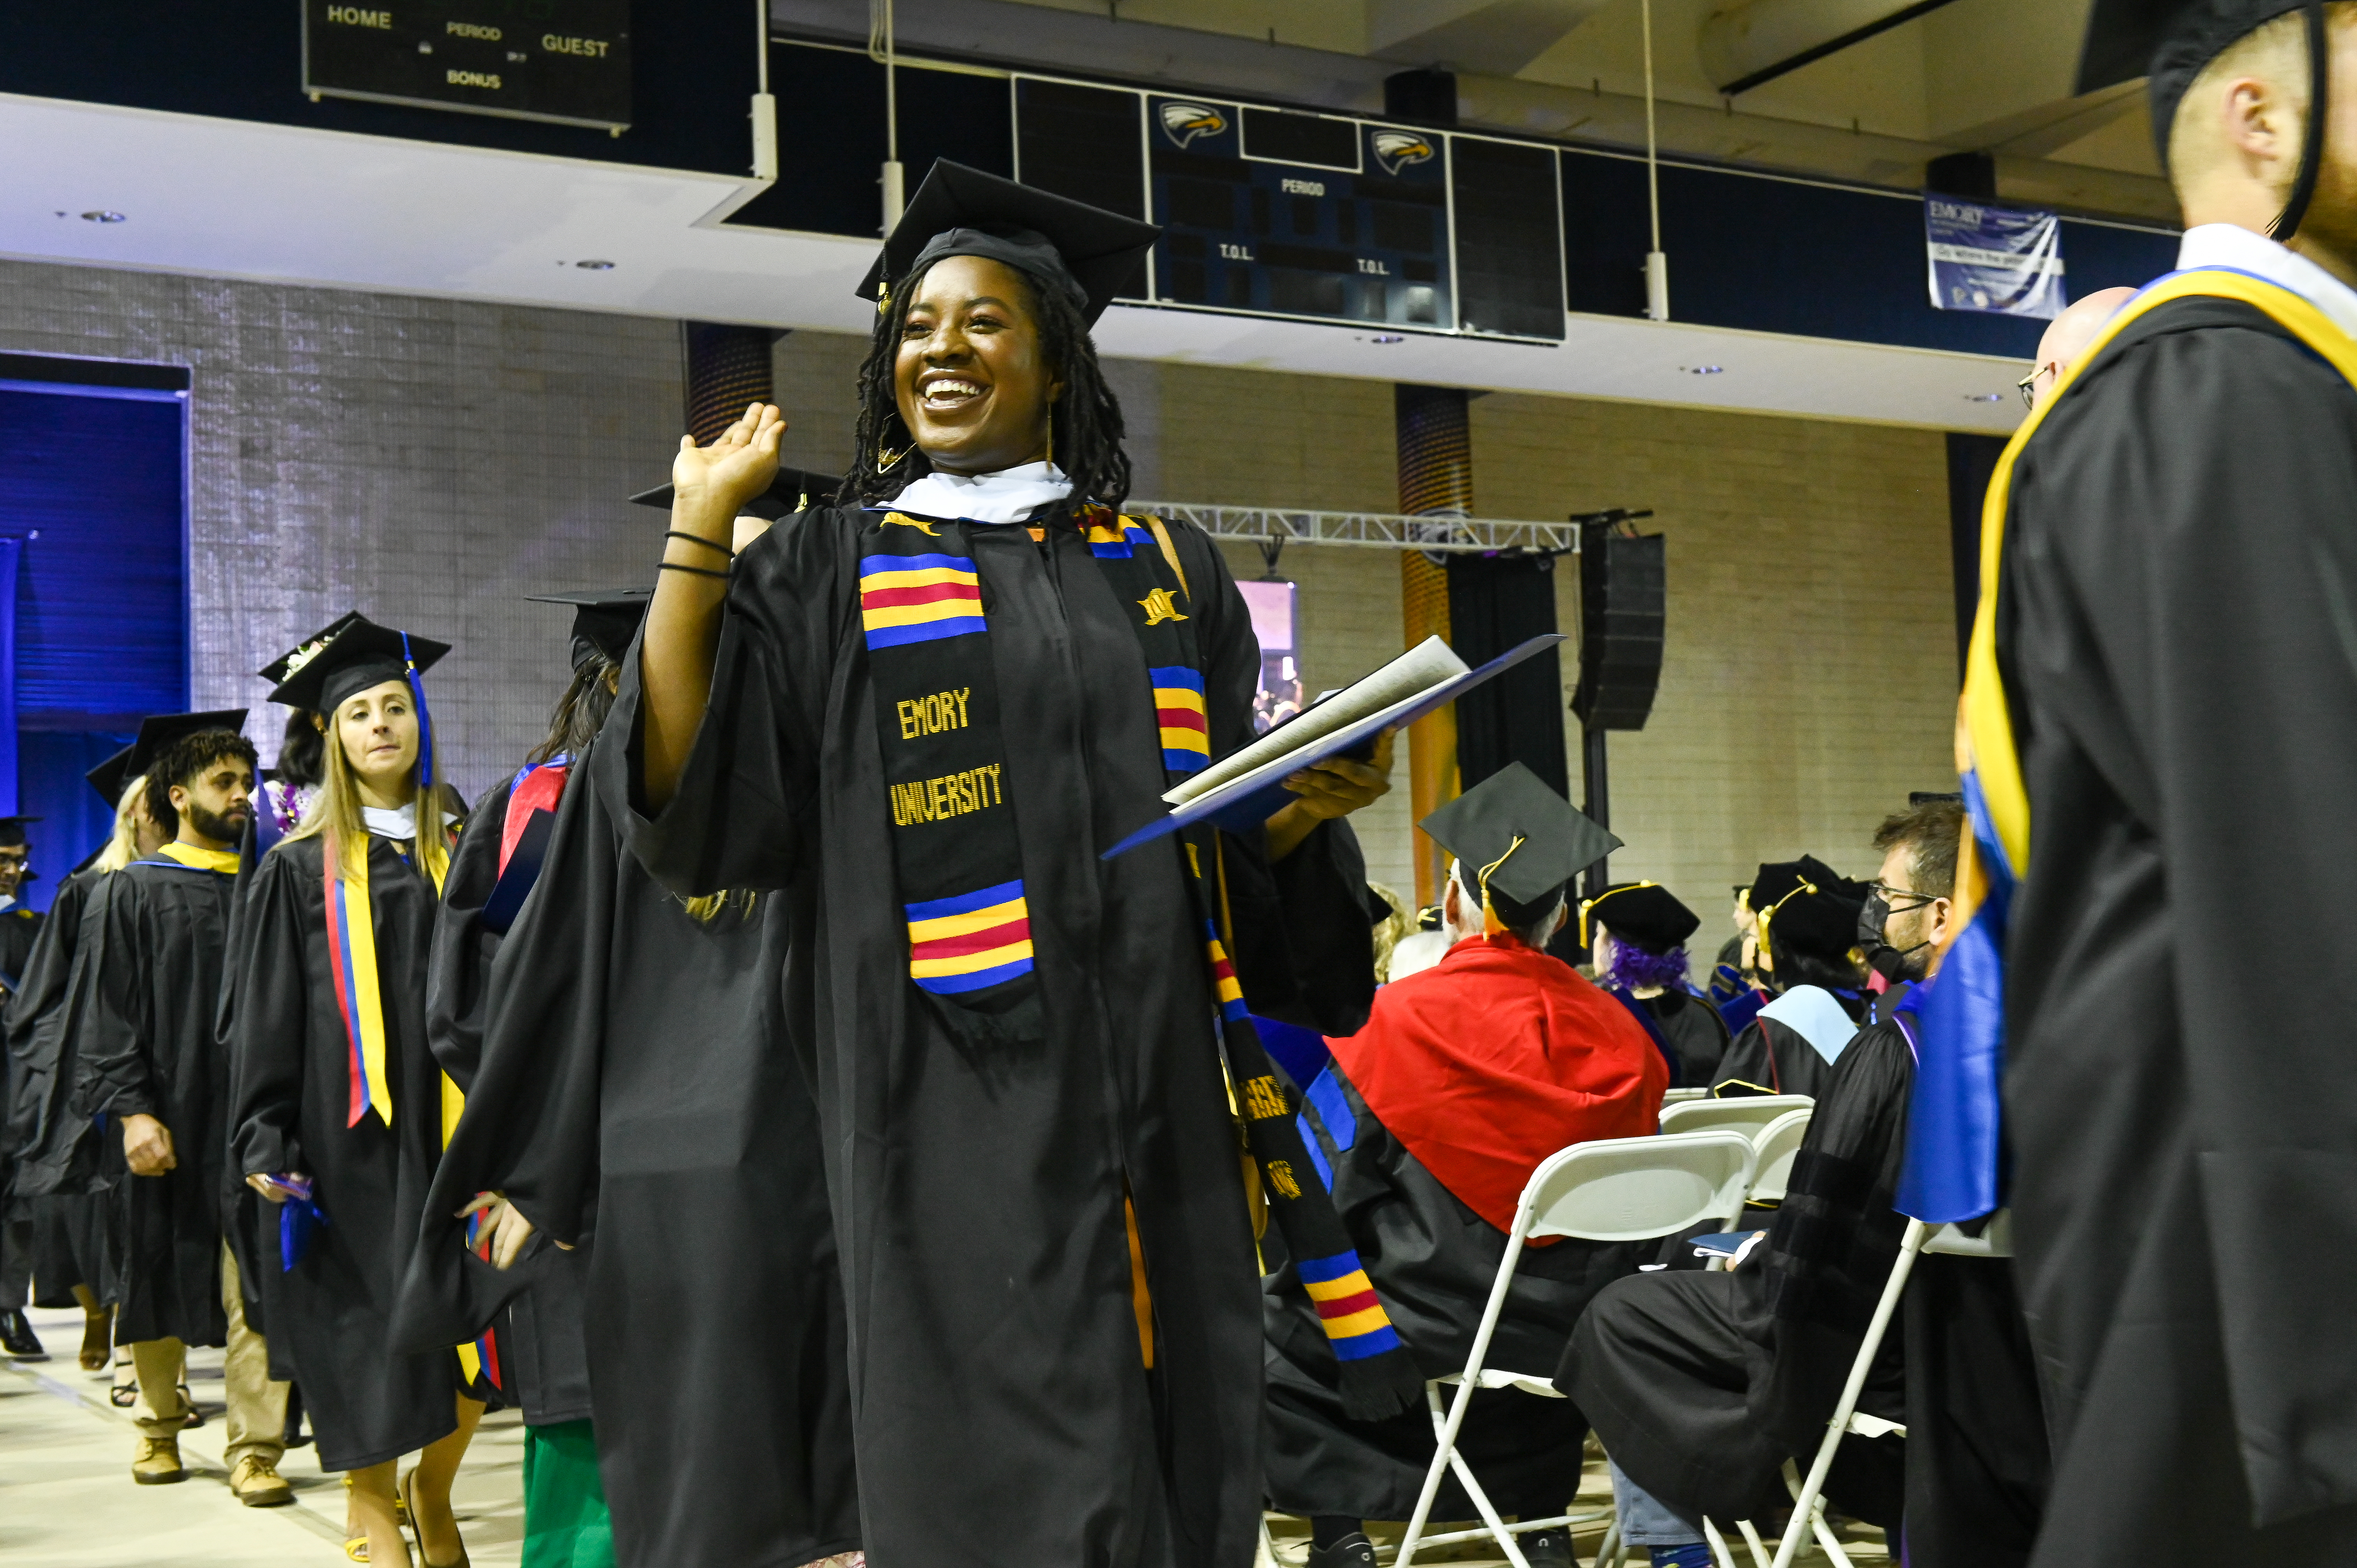 graduate walking and waving